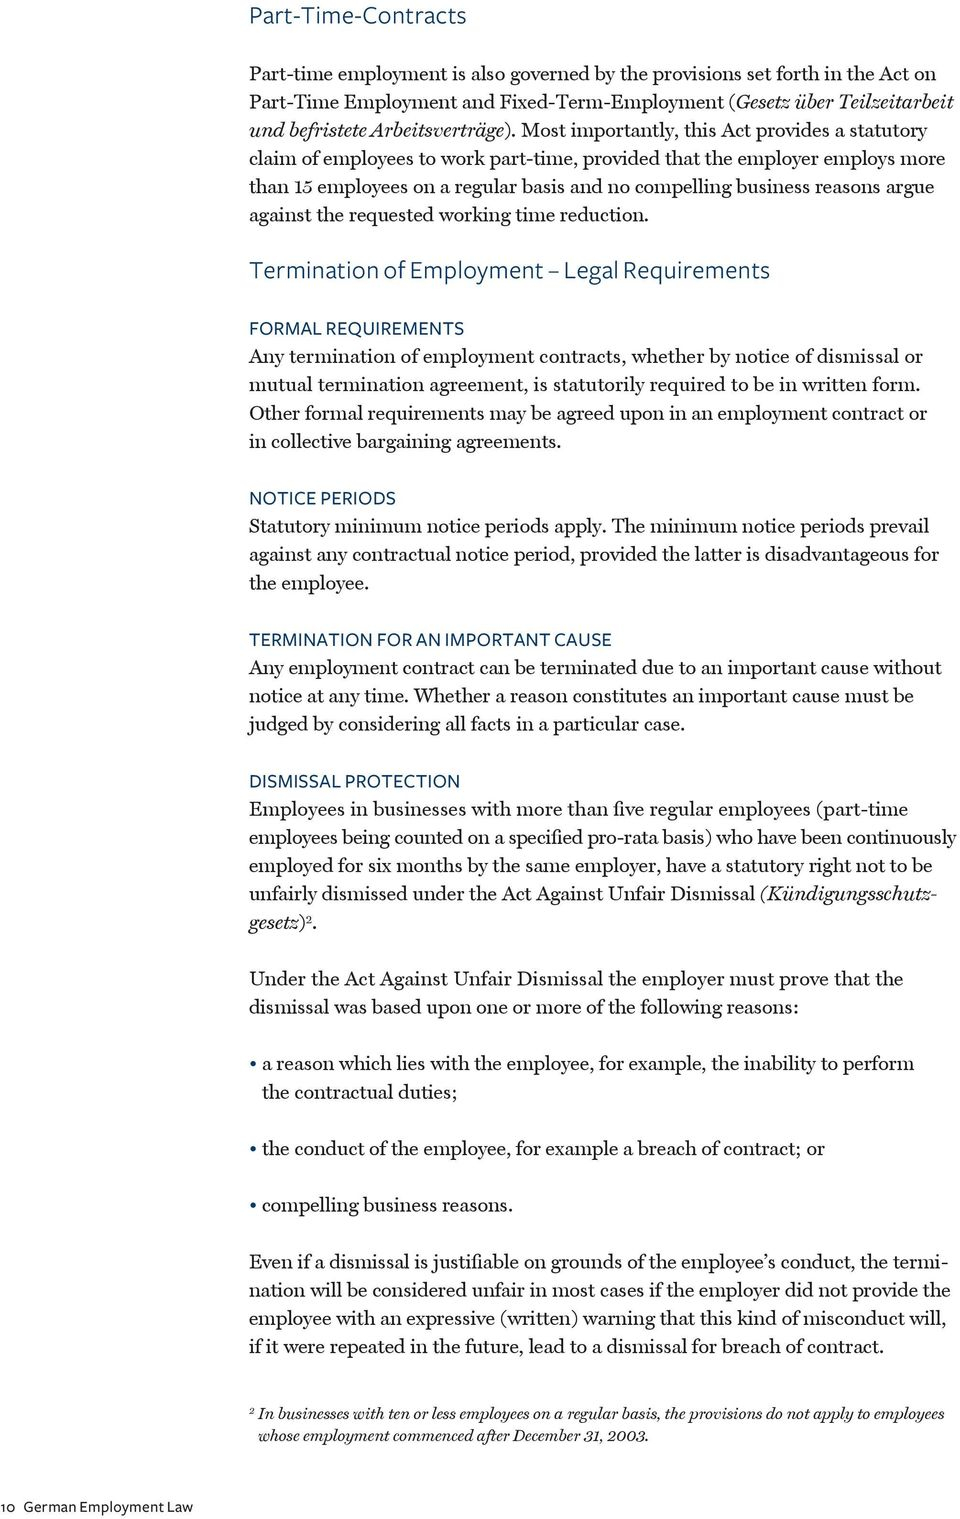 Employee Termination Agreement Sample German Employment Law Pdf